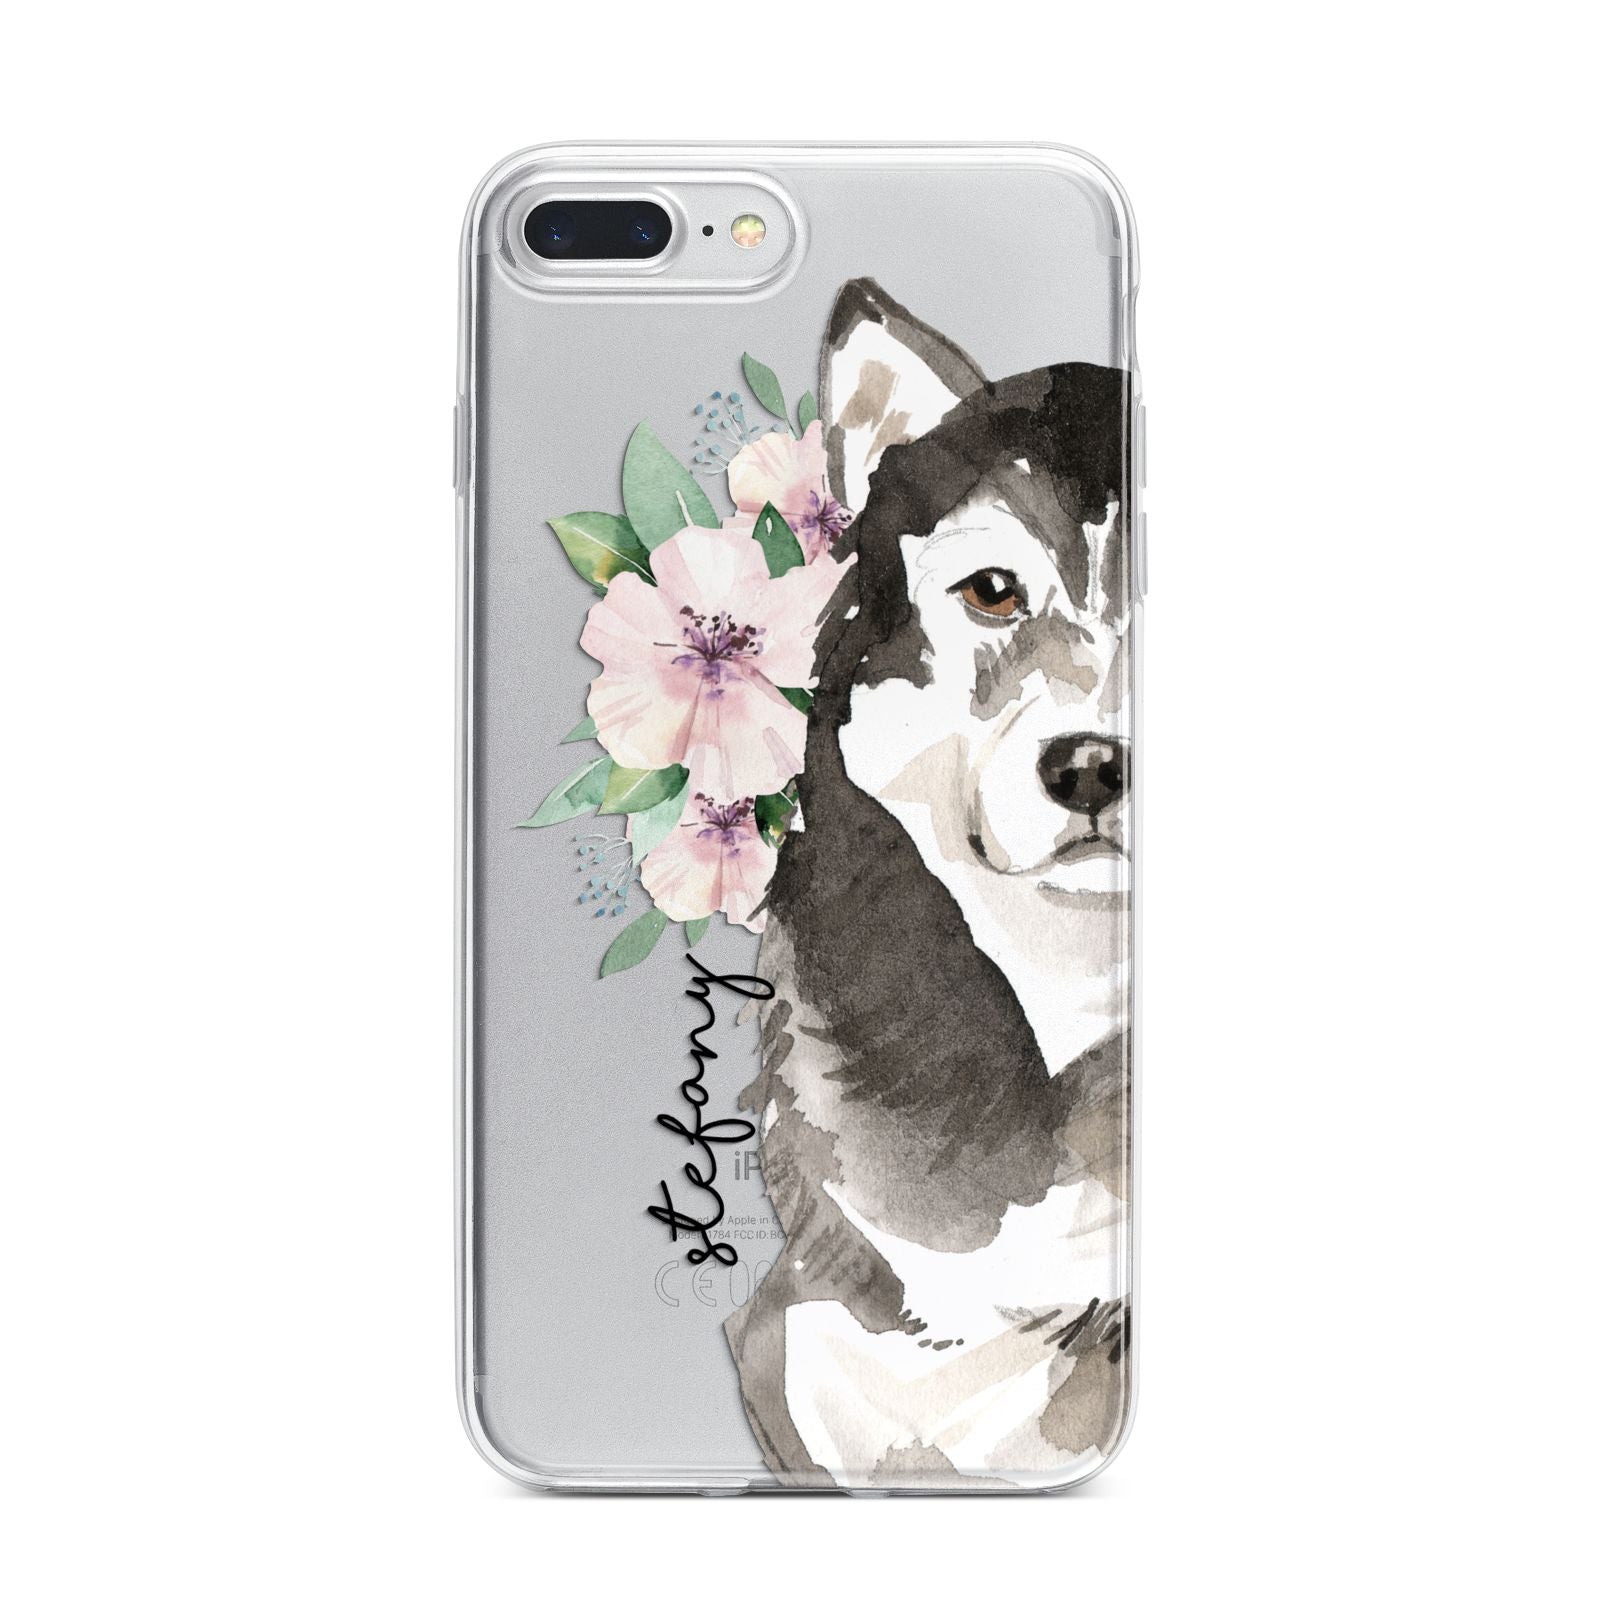 Personalised Alaskan Malamute iPhone 7 Plus Bumper Case on Silver iPhone